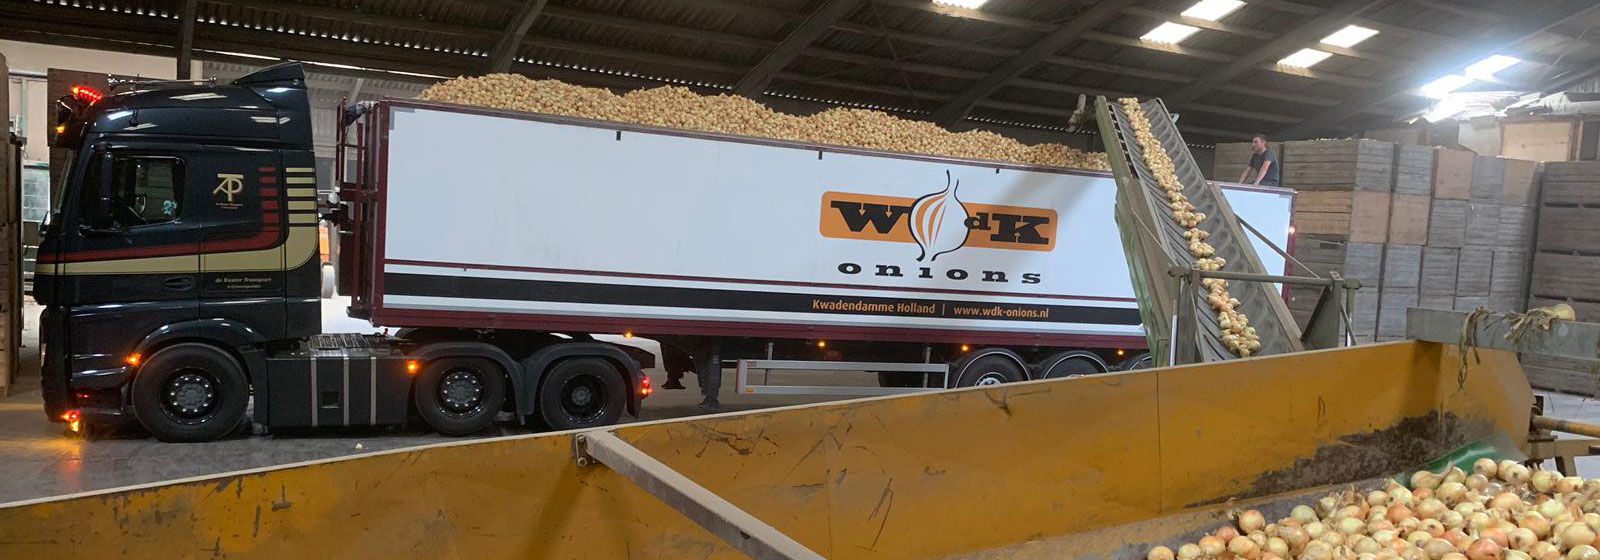 WDK Onions storage and logistics